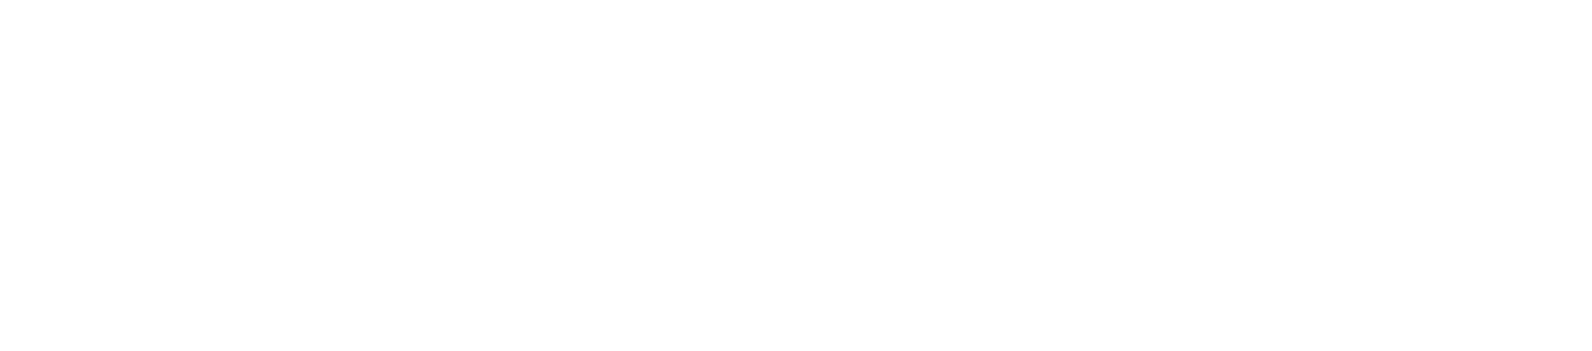 Zillow logo large for dark backgrounds (transparent PNG)